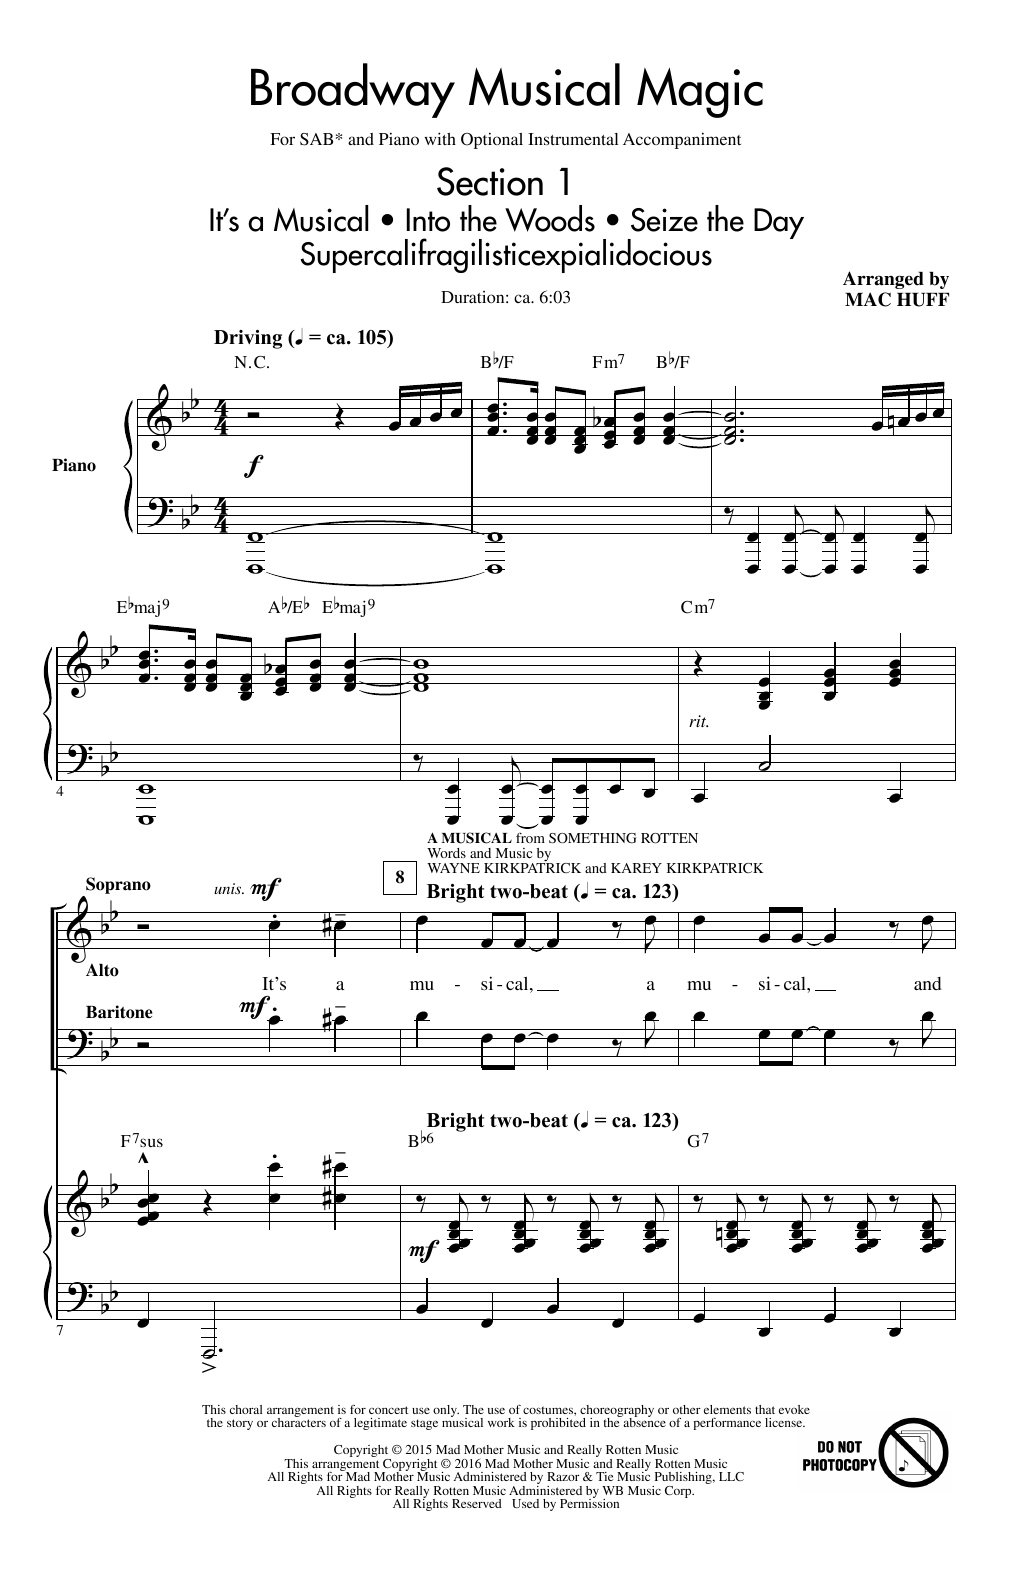 Mac Huff Broadway Musical Magic sheet music notes and chords arranged for SAB Choir